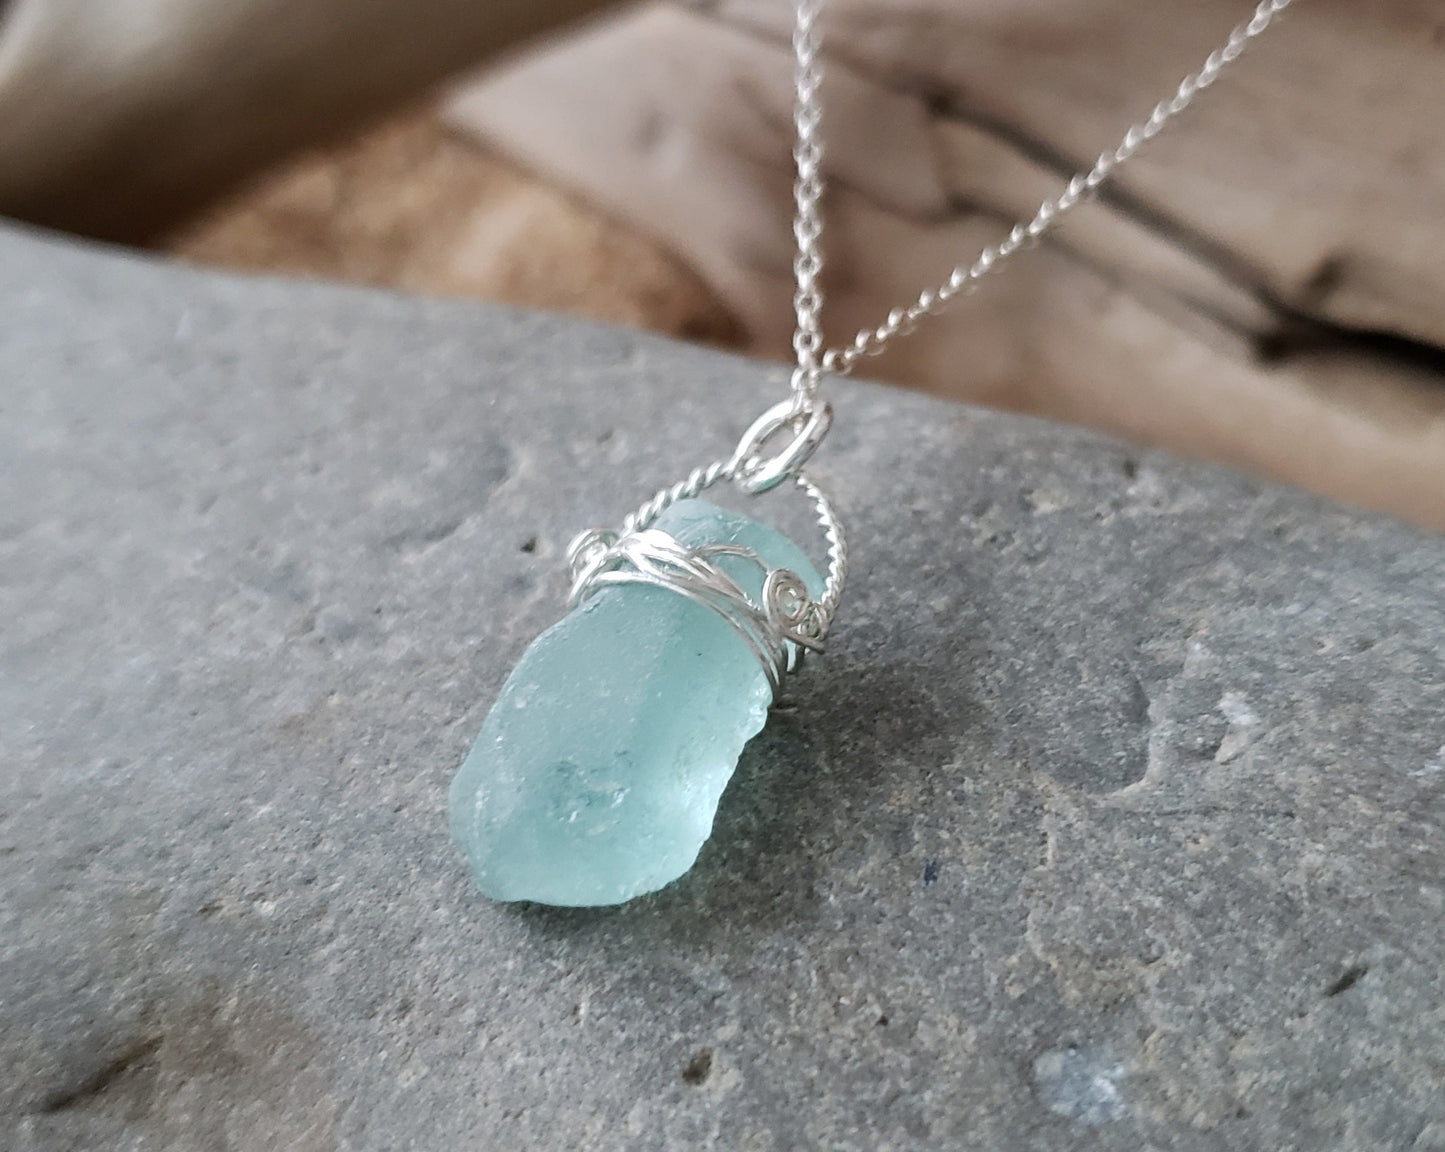 Aqua Blue Beach Glass Serenity Pendant Necklace, on stone background